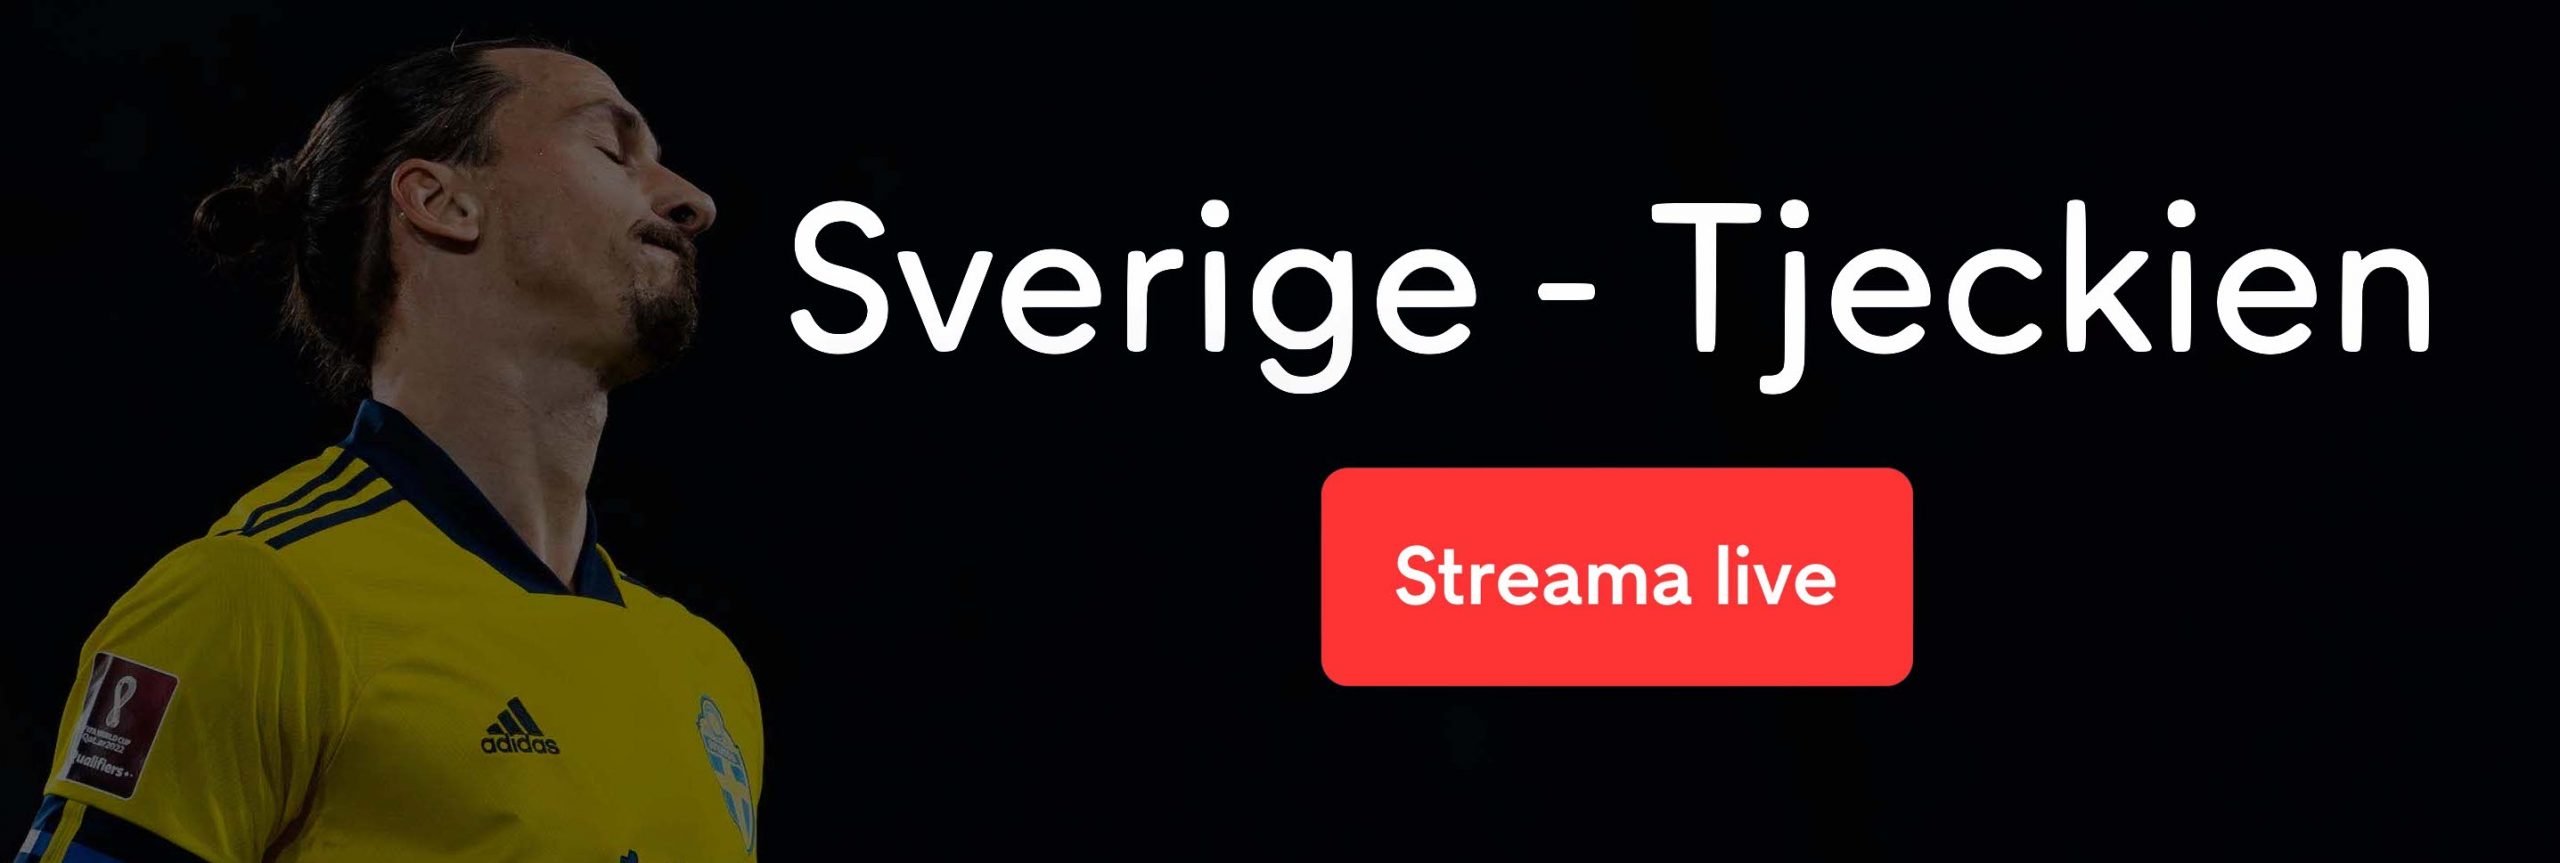 Sverige Tjeckien live stream gratis? Streama Sverige Tjeckien idag!